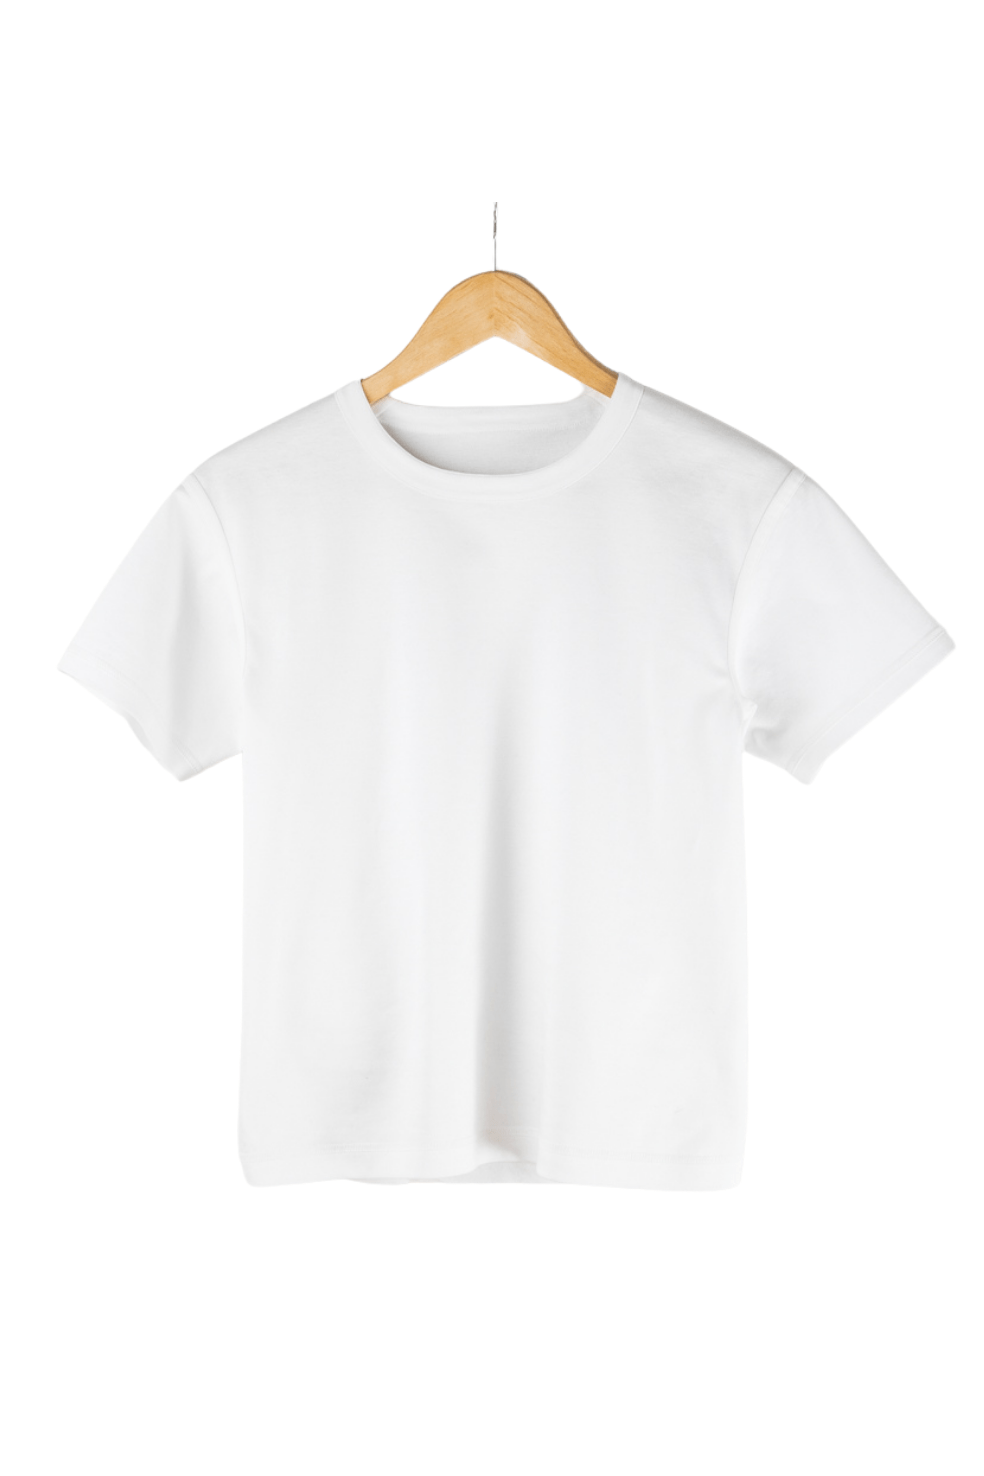 【KABIN-Tシャツ】【大人サイズ】縫い目外側/黒・白・カーキ・ピンク・ブルー・サックス